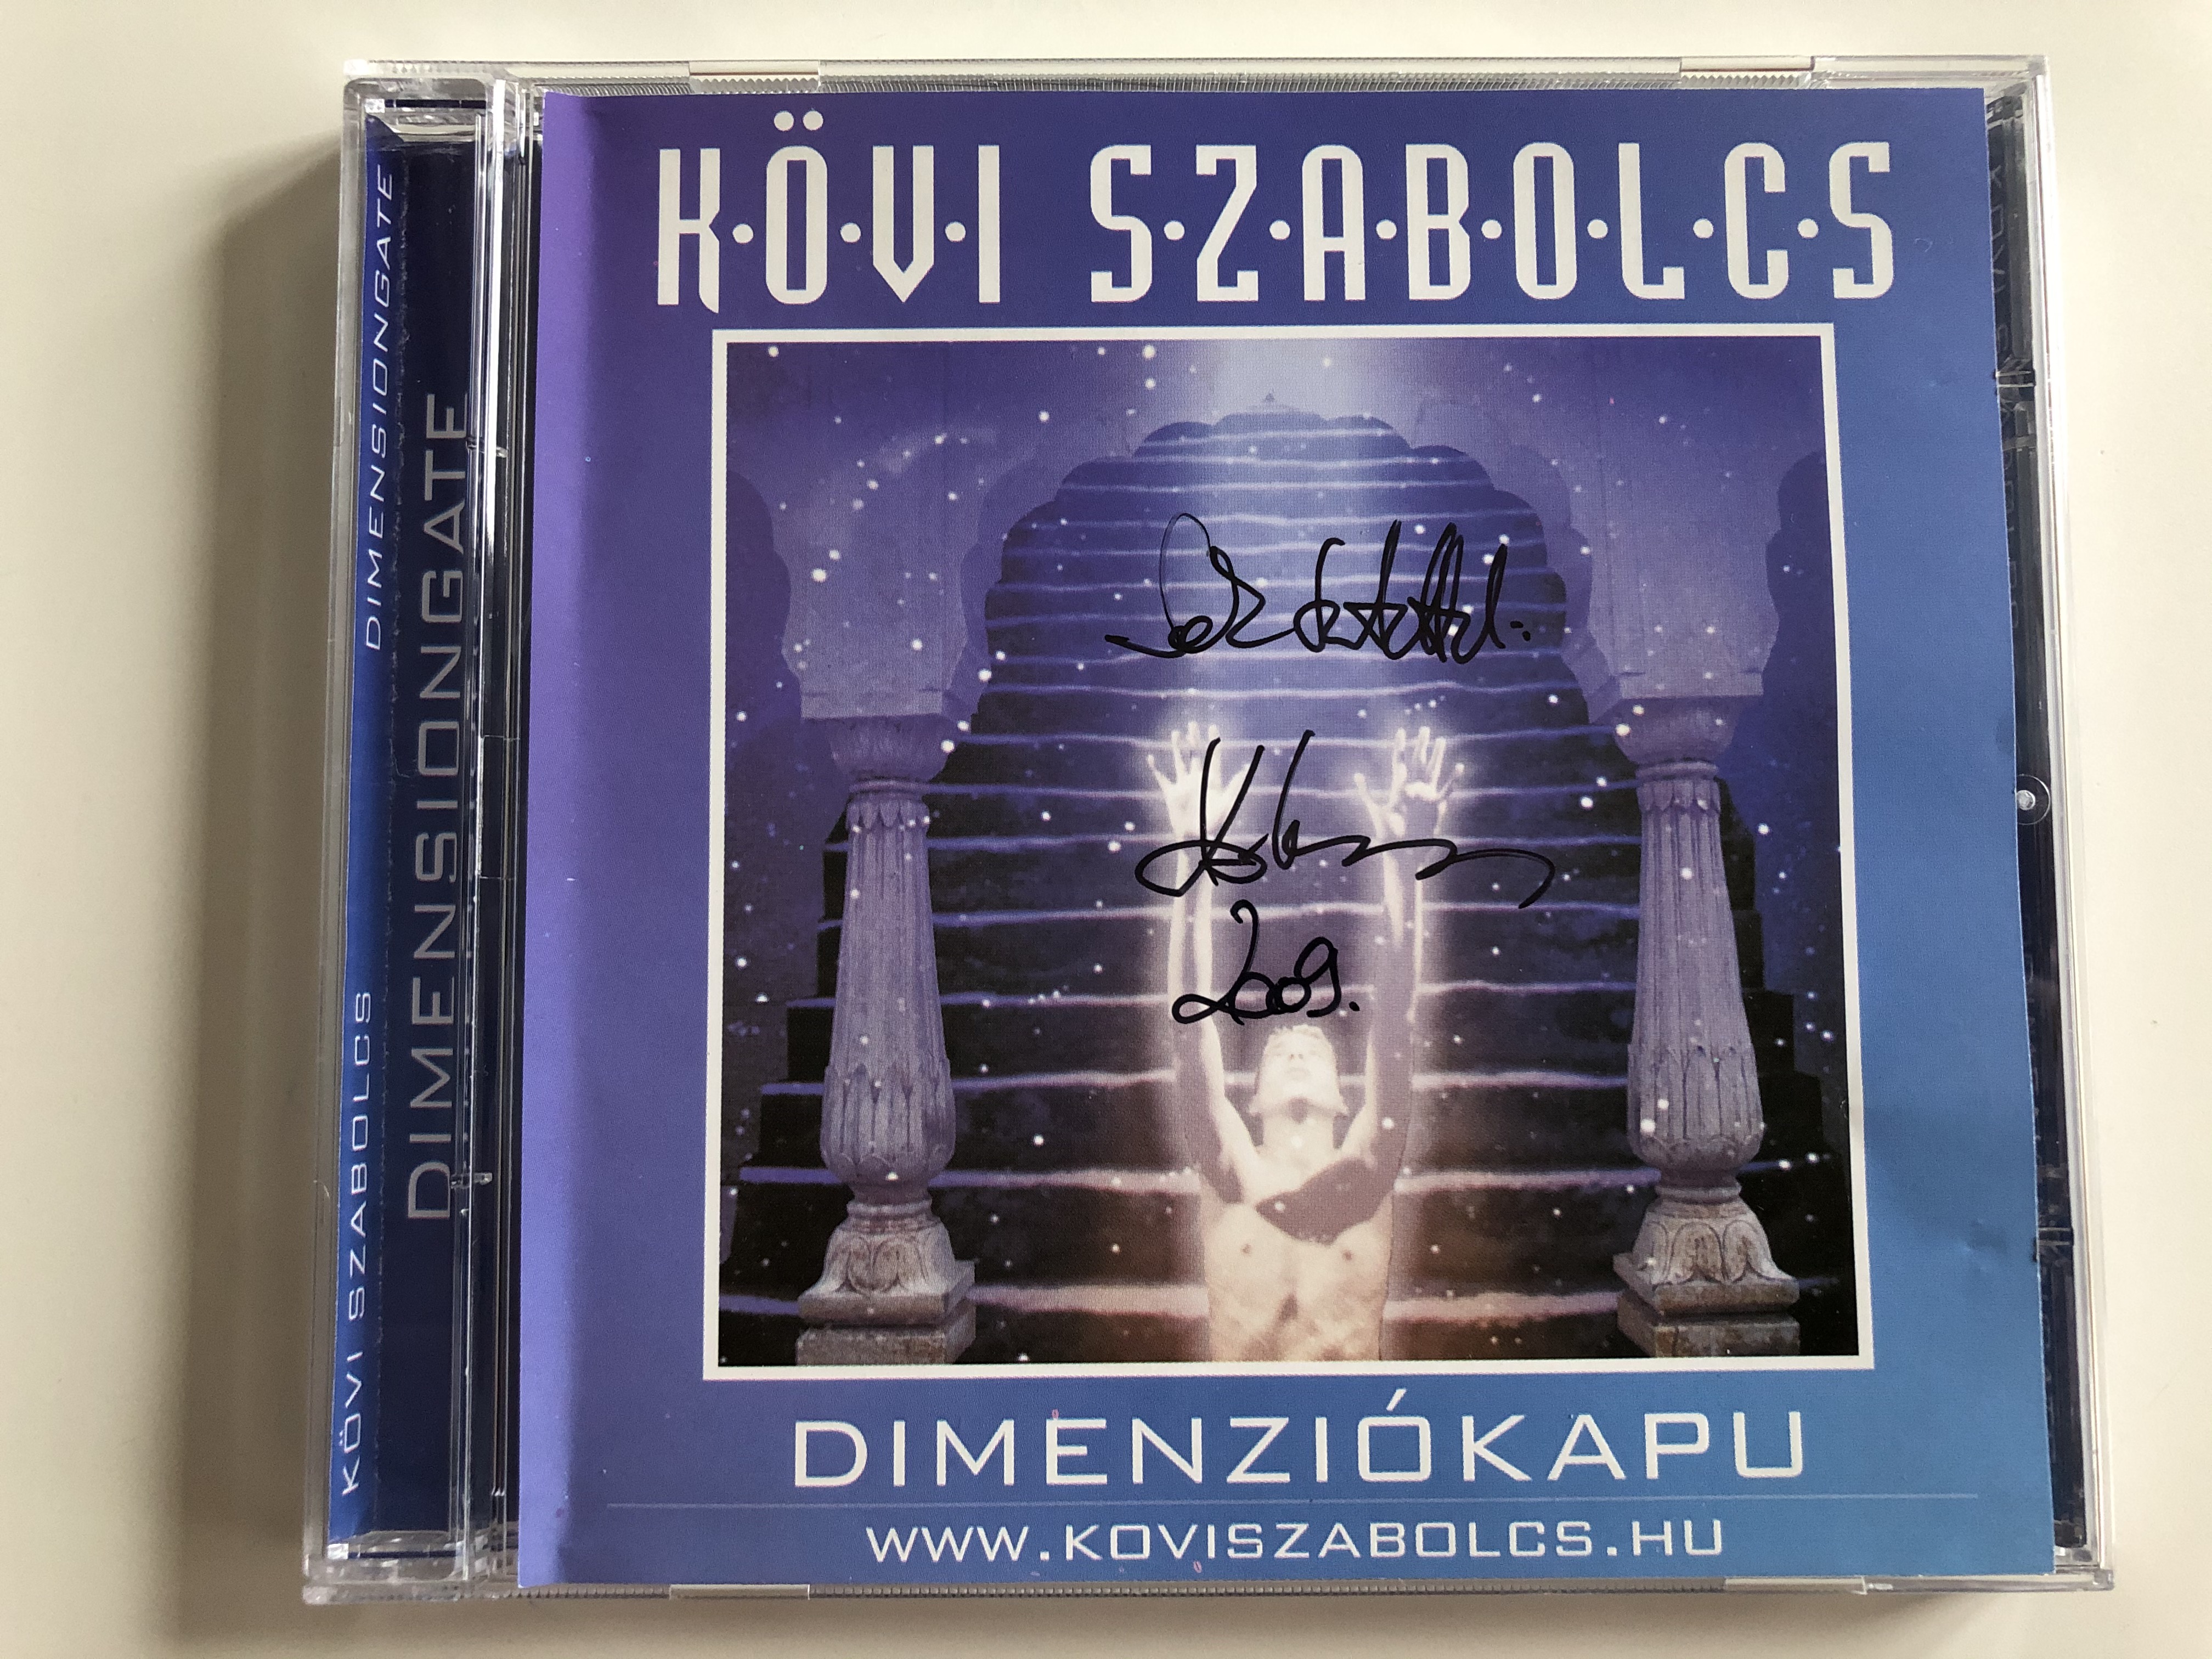 k-vi-szabolcs-dimenzi-kapu-audio-cd-1999-cd97001-1-.jpg